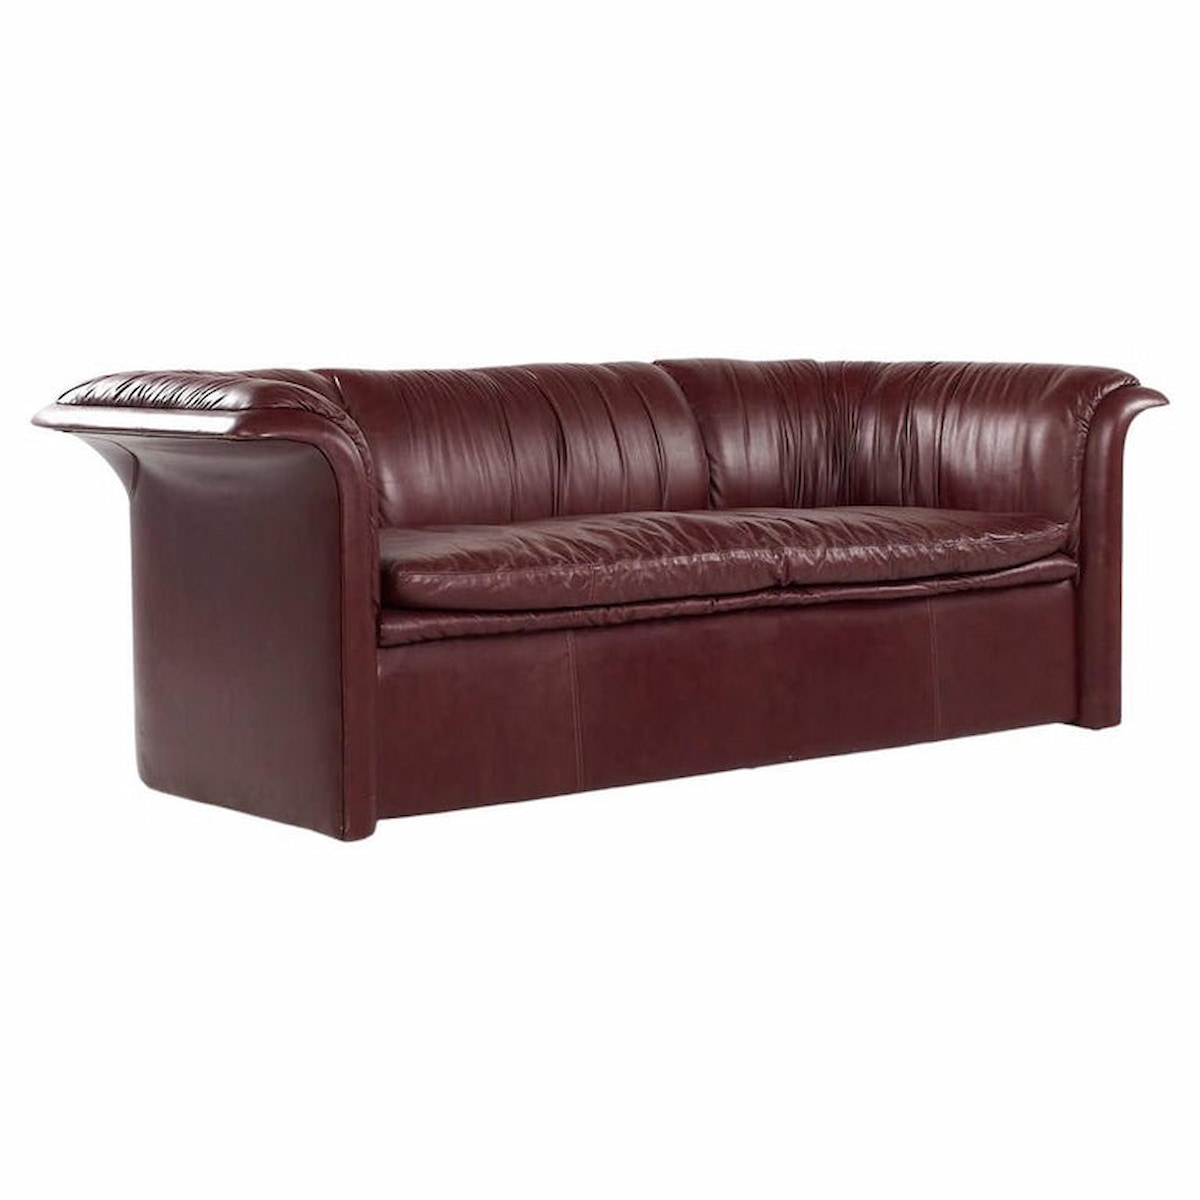 Dunbar Mid Century Leather Sofa